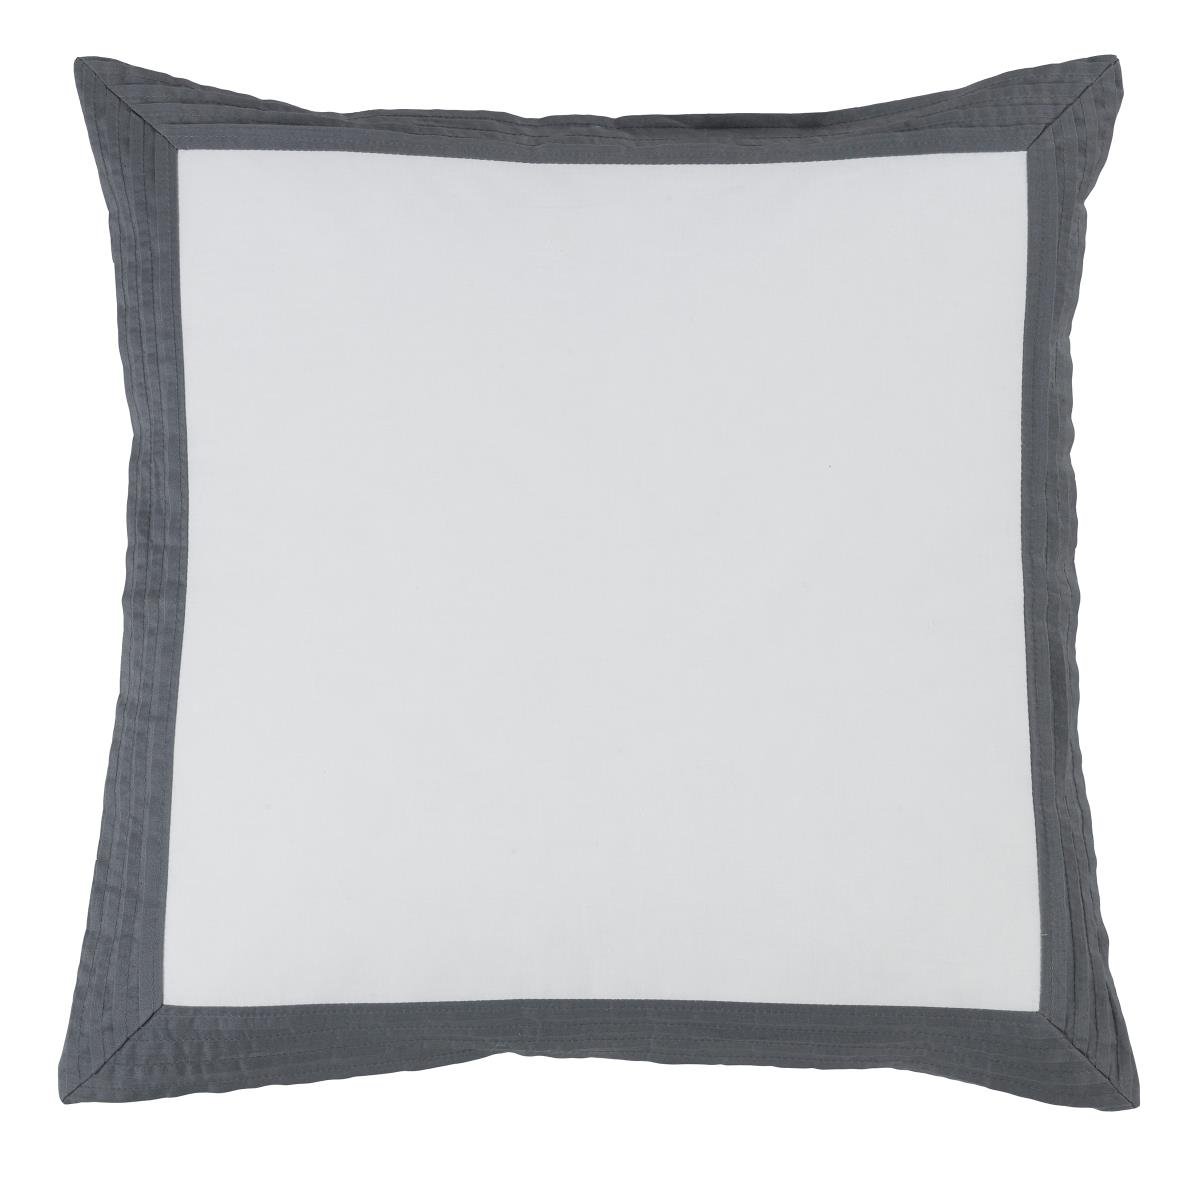 Y00363 Decorative Pillow With Grey Pleats - Vista White